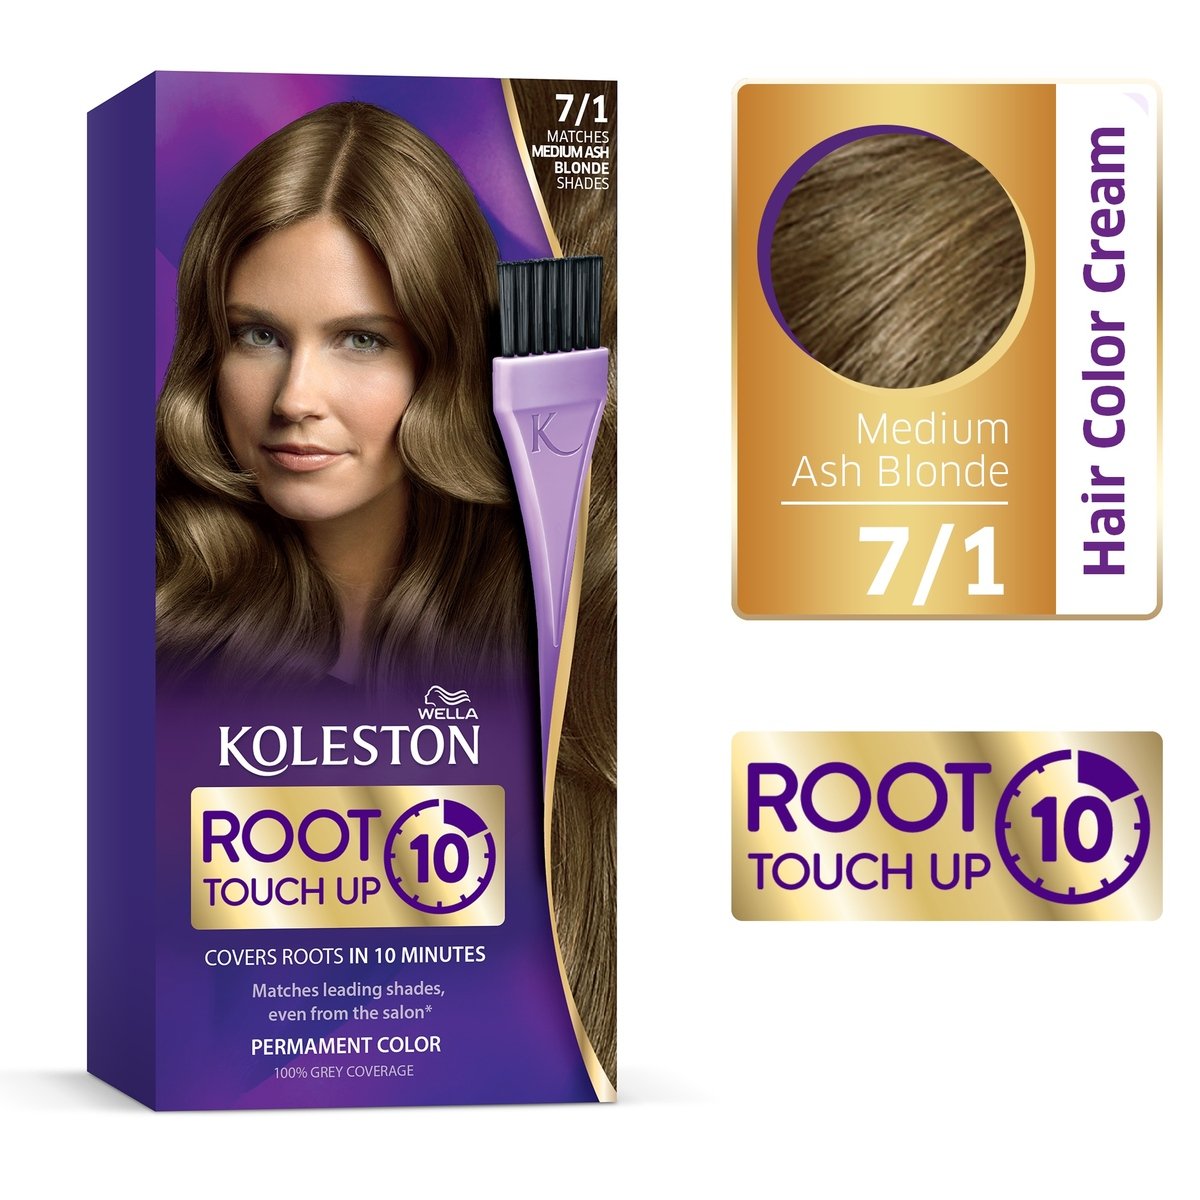 Koleston Root Touch Up 7/1 Medium Ash Blonde 1 pkt